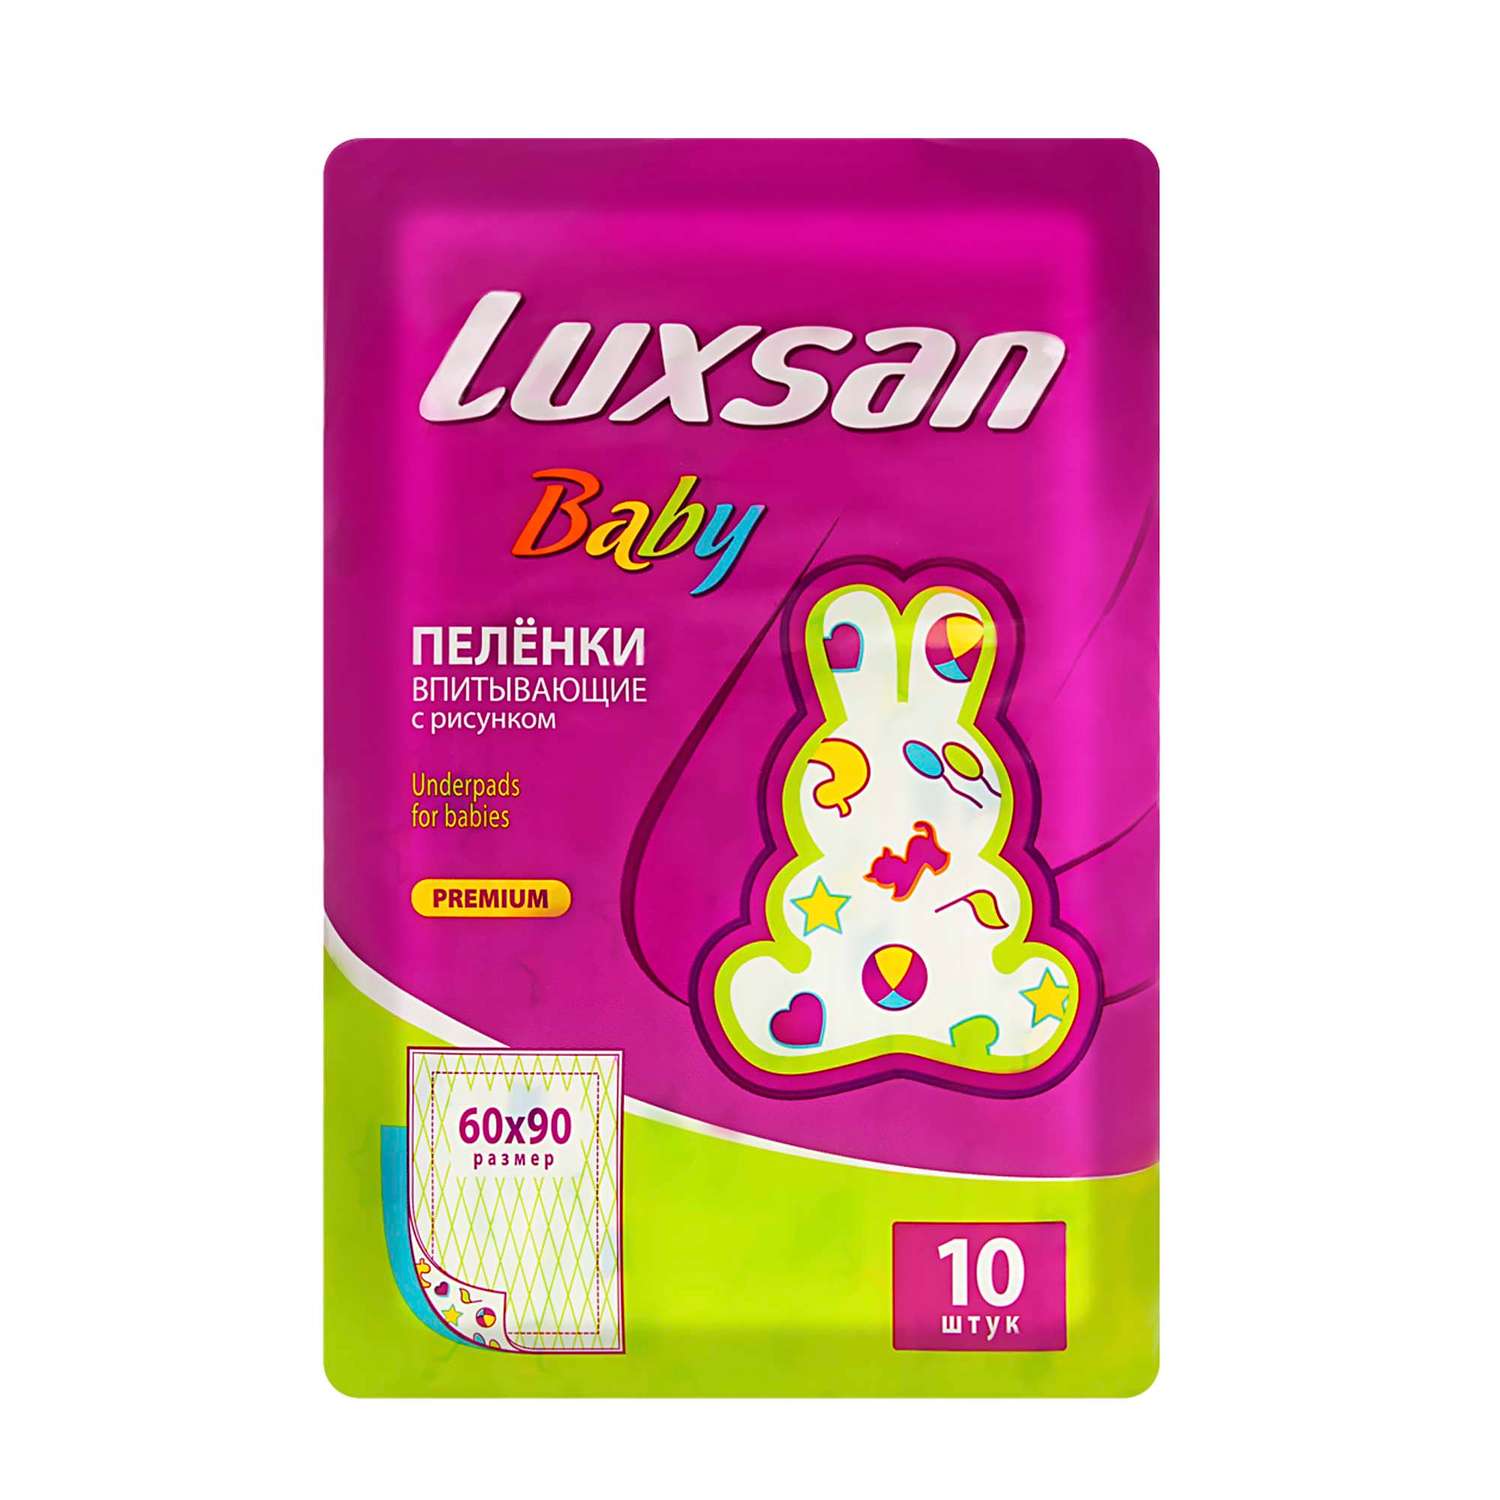 Пеленки впитывающие Luxsan Baby с рисунком 60х90 10 шт - фото 1